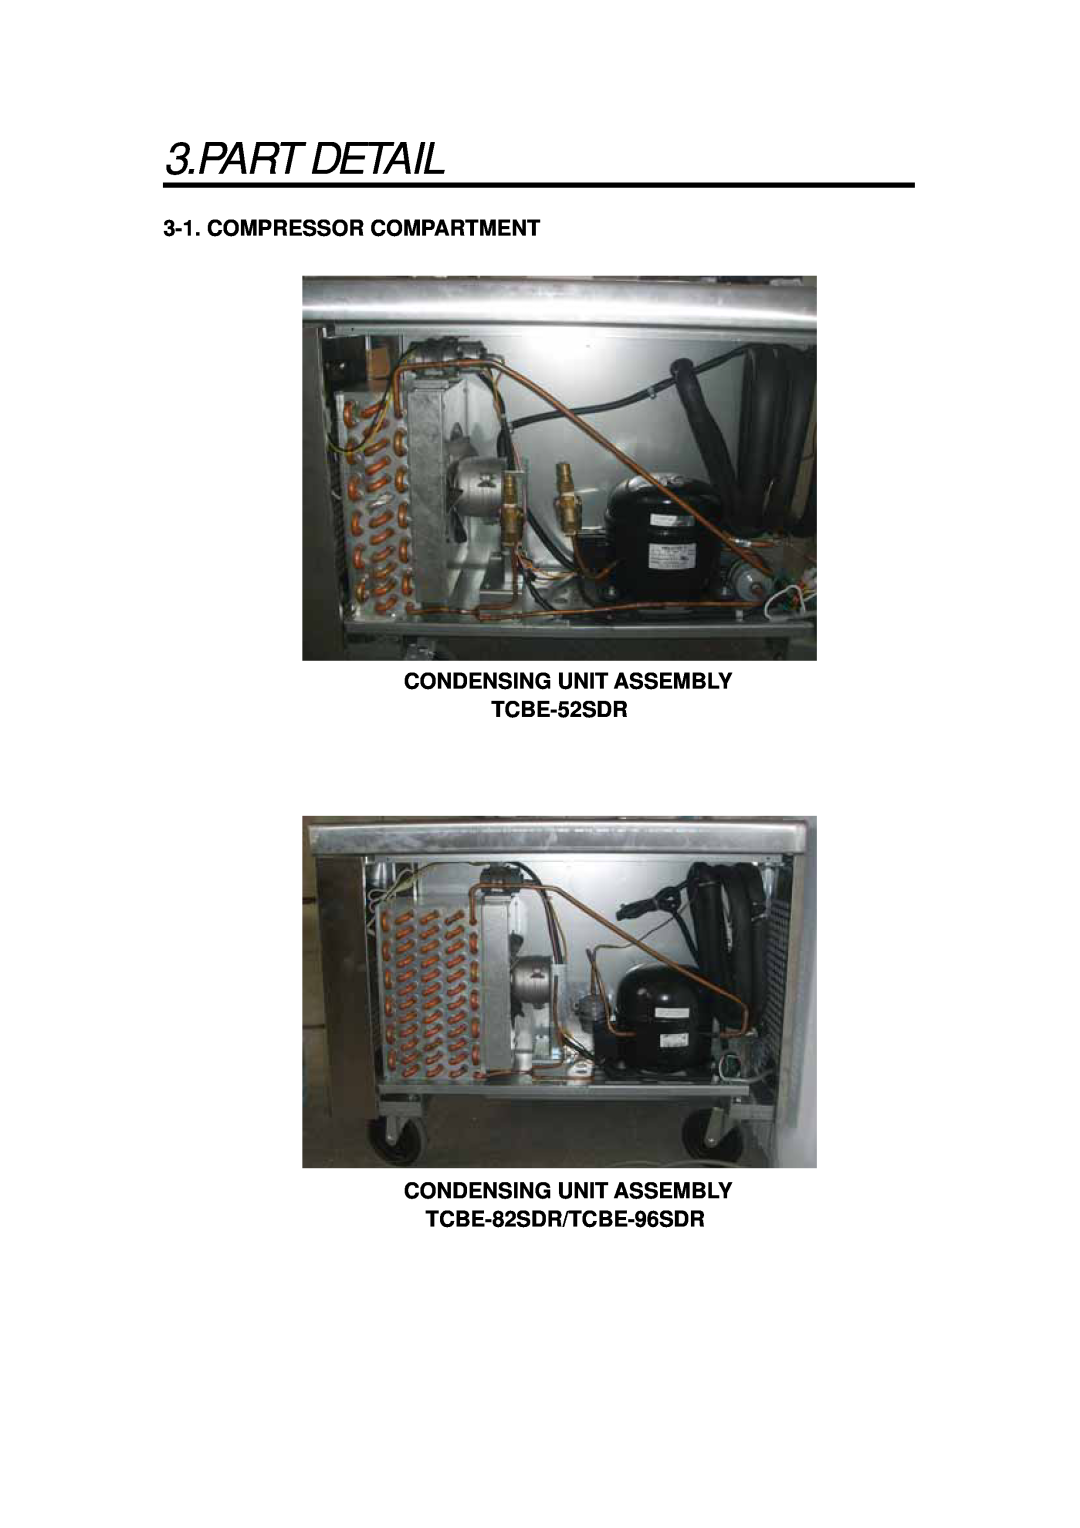 Turbo Air TCBE-96SDR, TCBE-82SDR manual Part Detail, Compressor Compartment, CONDENSING UNIT ASSEMBLY TCBE-52SDR 